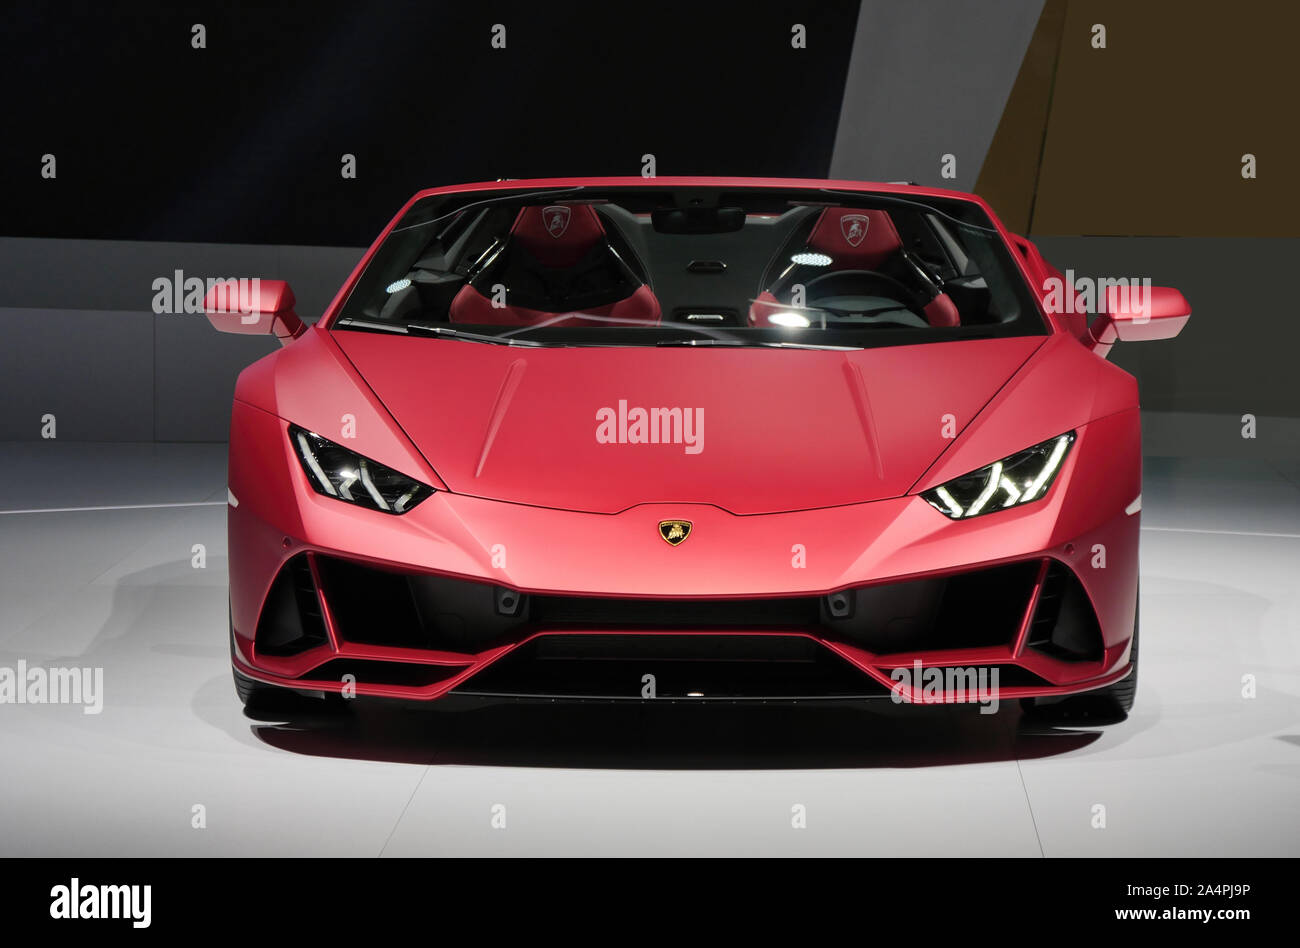 FRANKFURT, GERMANY - SEP 19.2019: Lamborghini Sian FKP 37 sports car unveiled at the Frankfurt IAA Motor Show 2019. - Image Stock Photo